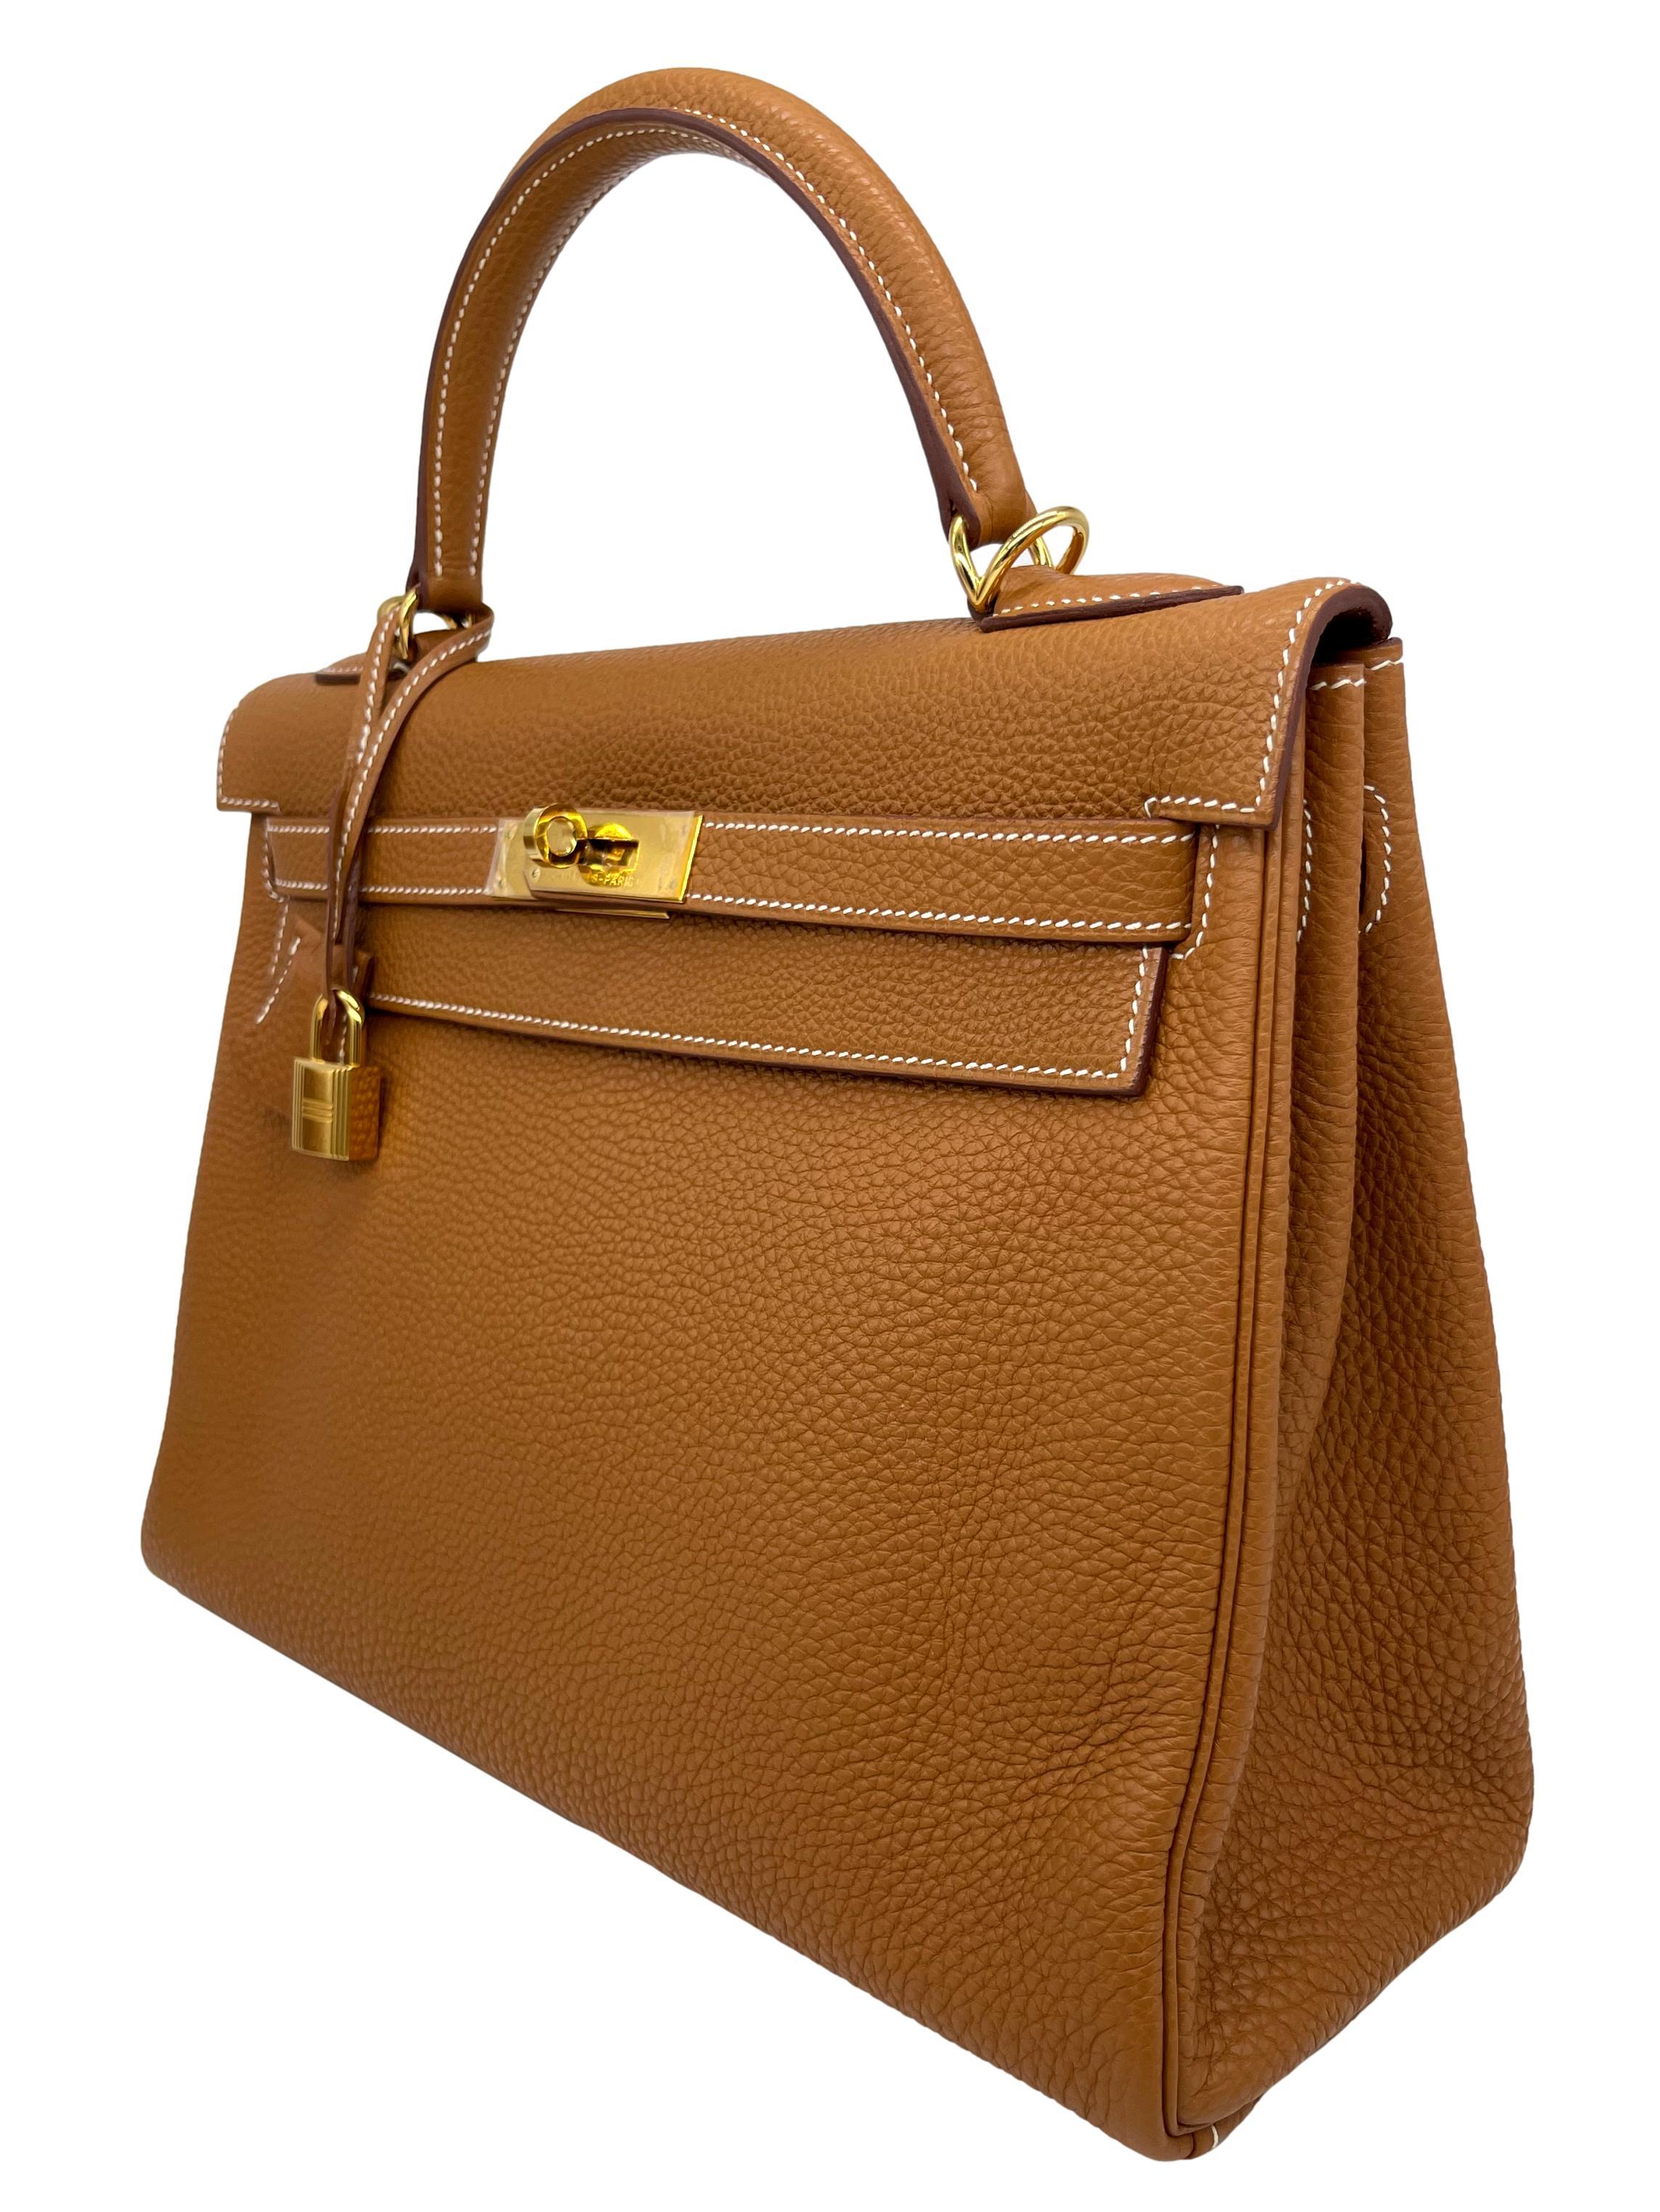 Hermès Natural Clemence Retourne Kelly Handbag with Gold Hardware 32cm, 2007. 1